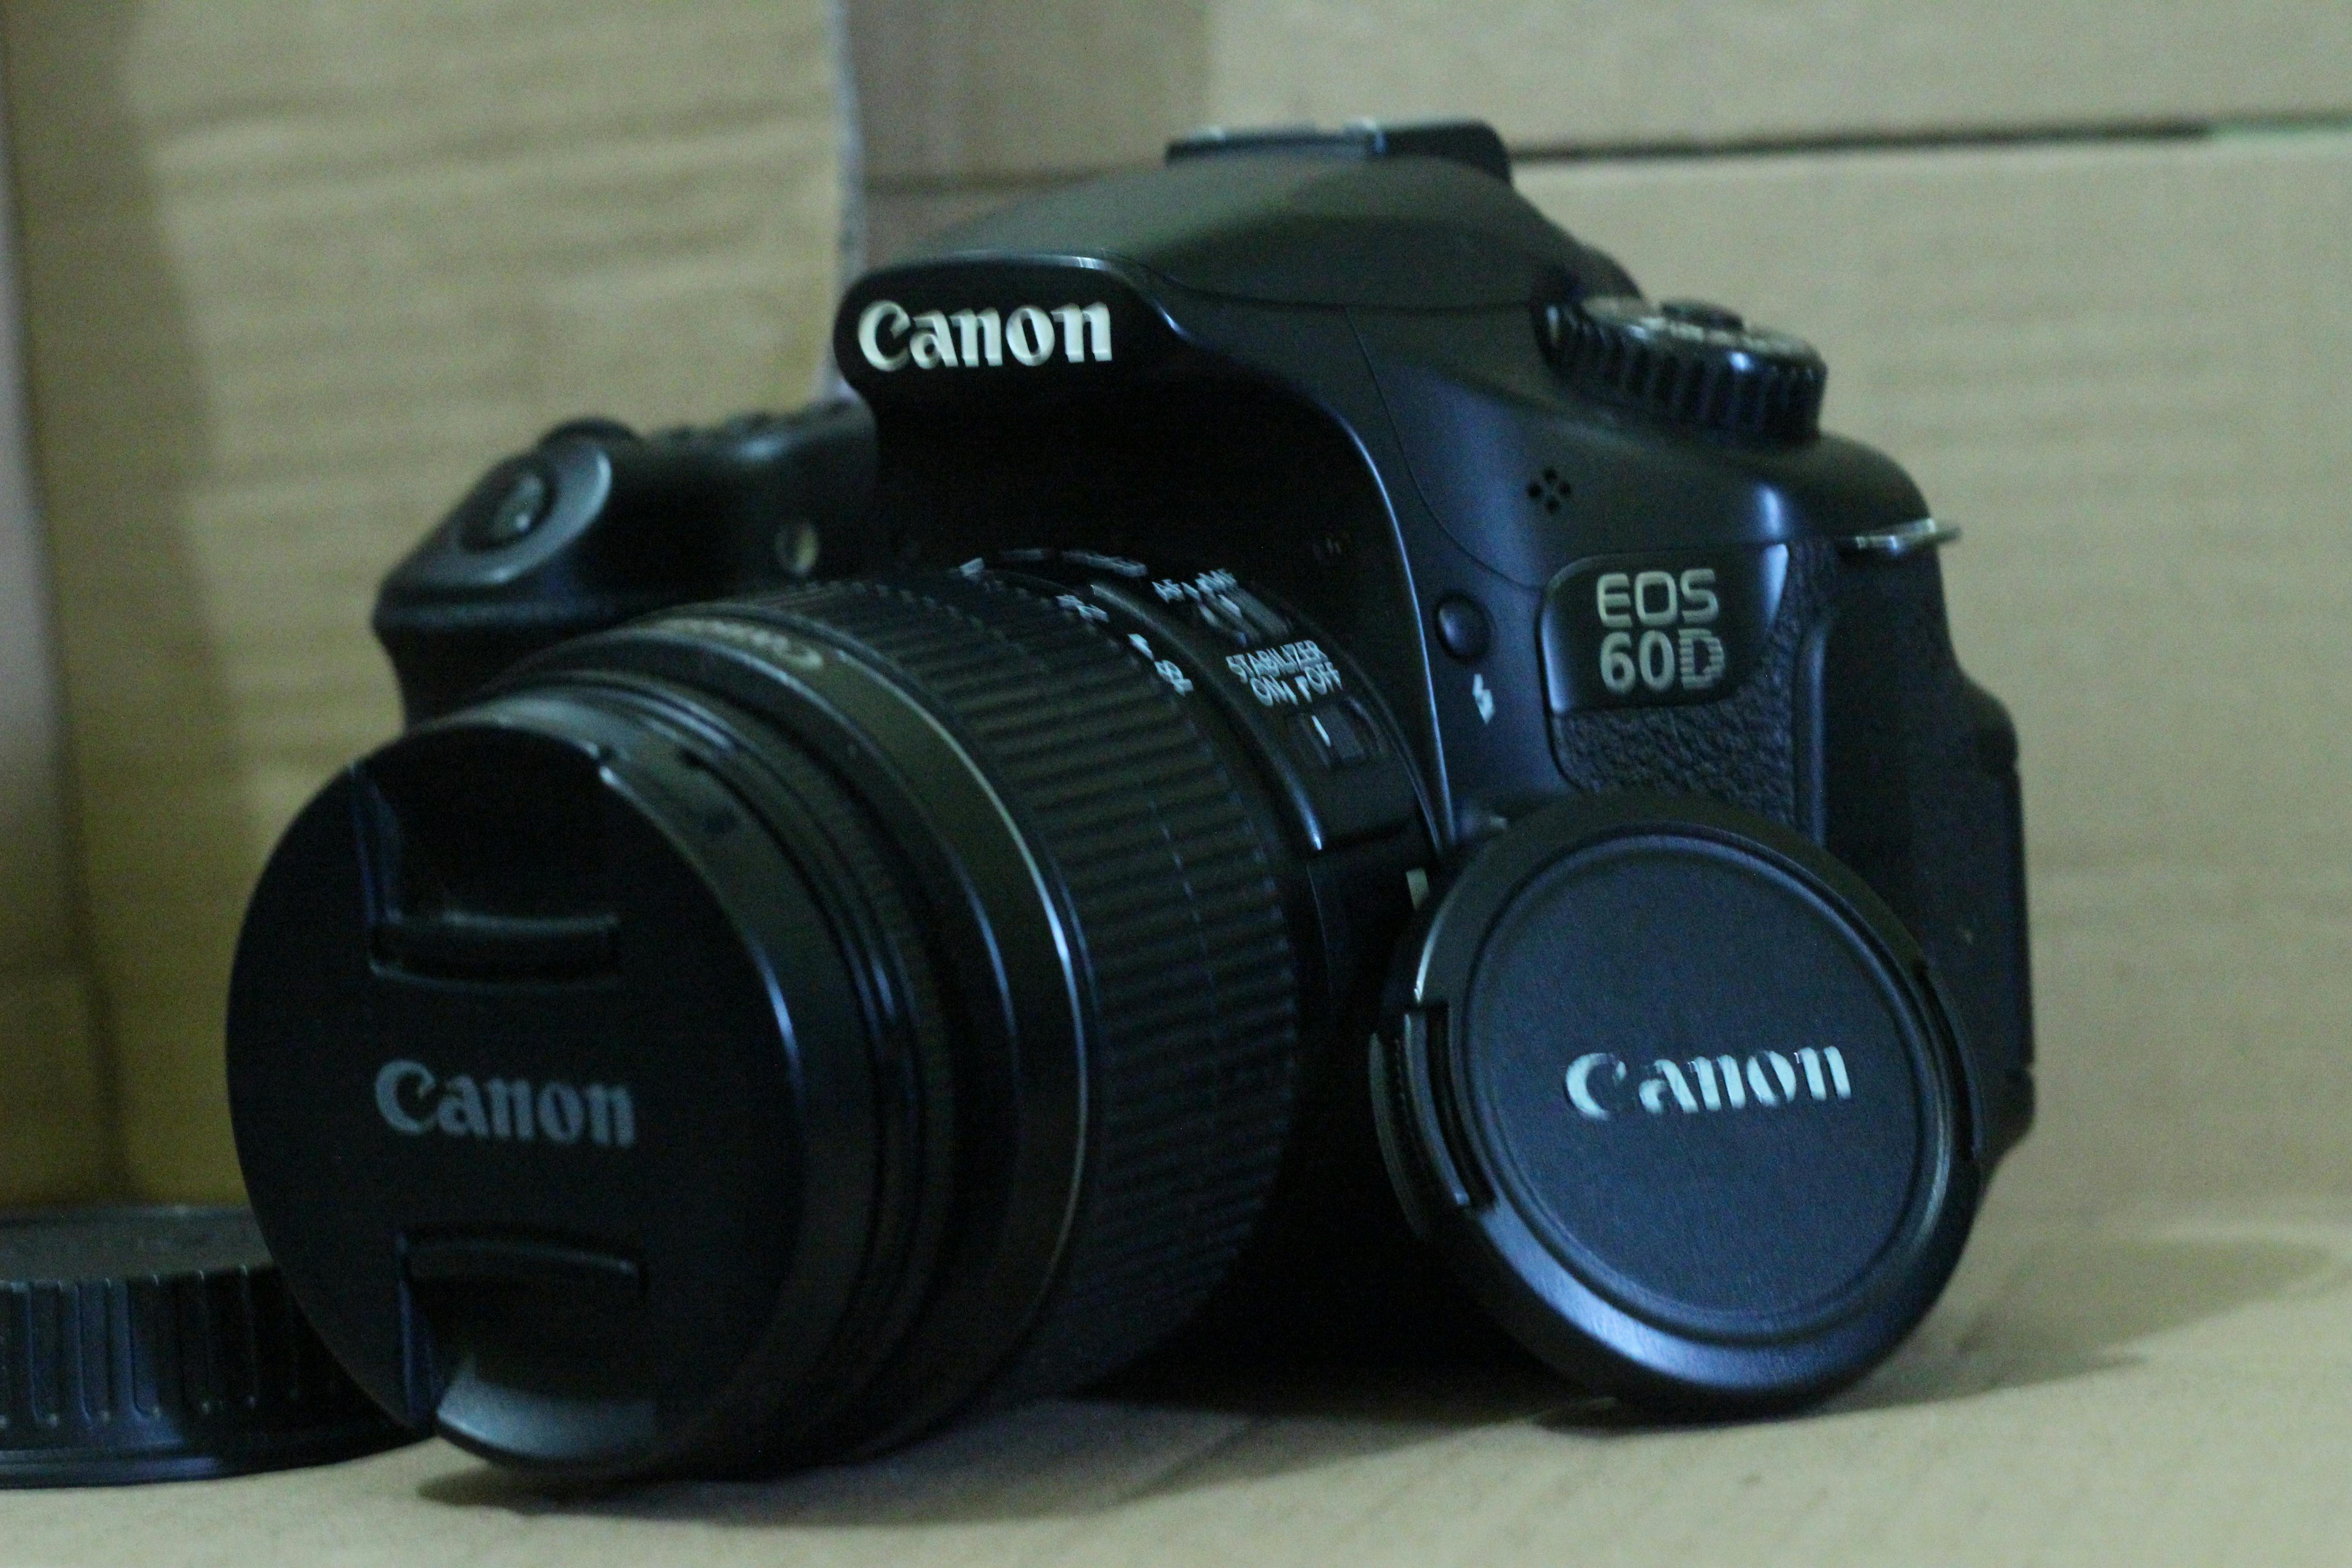 Free stock photo of camera, canon, lens cap